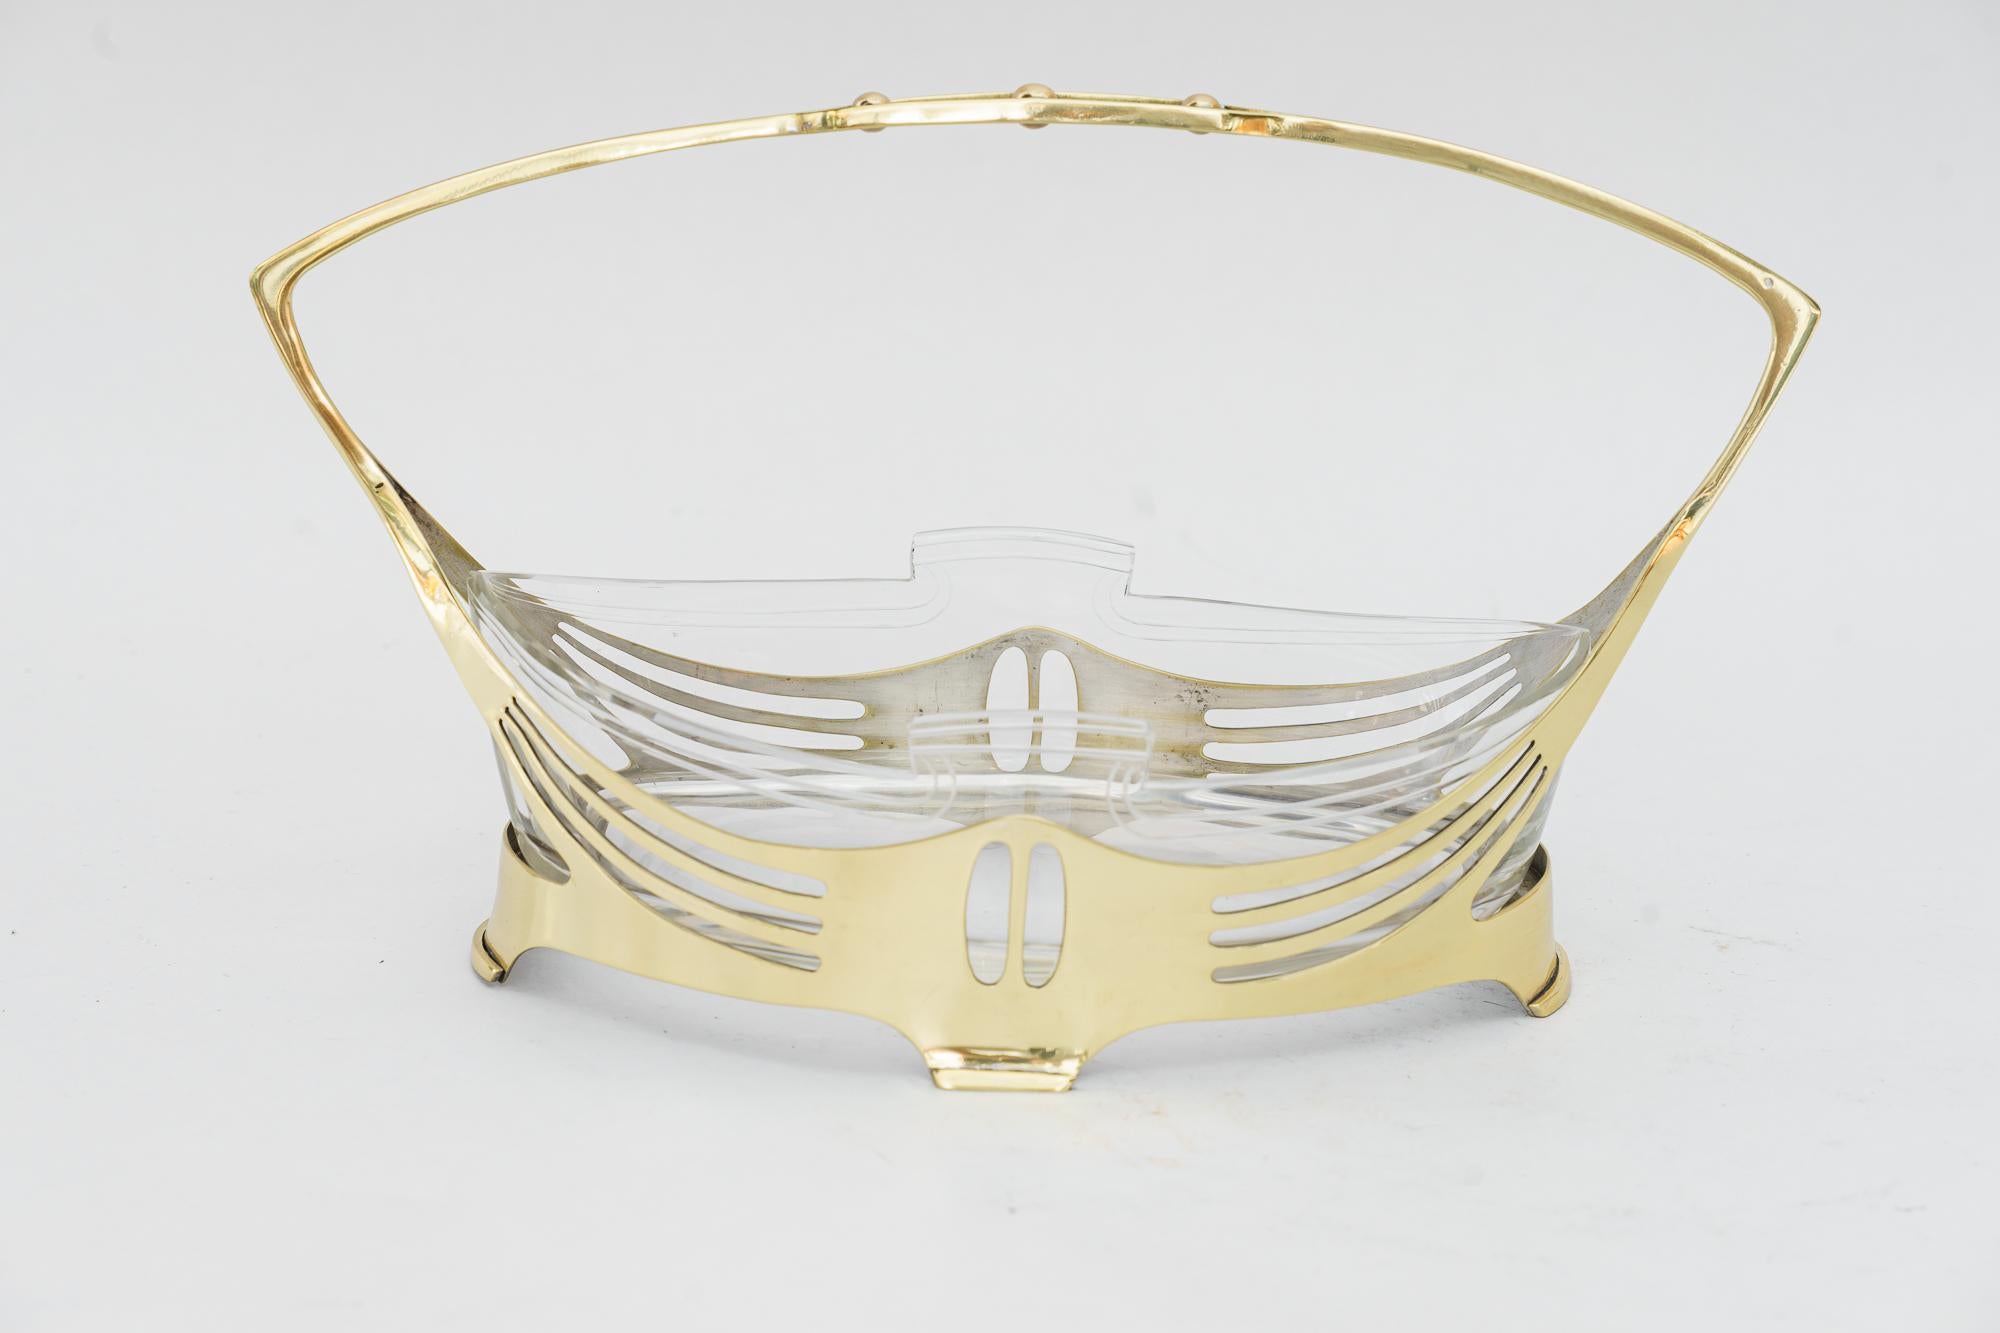 Very elegant argentor centerpiece art deco vienna around 1920s
Brass polished and stove enameled
Original glass 